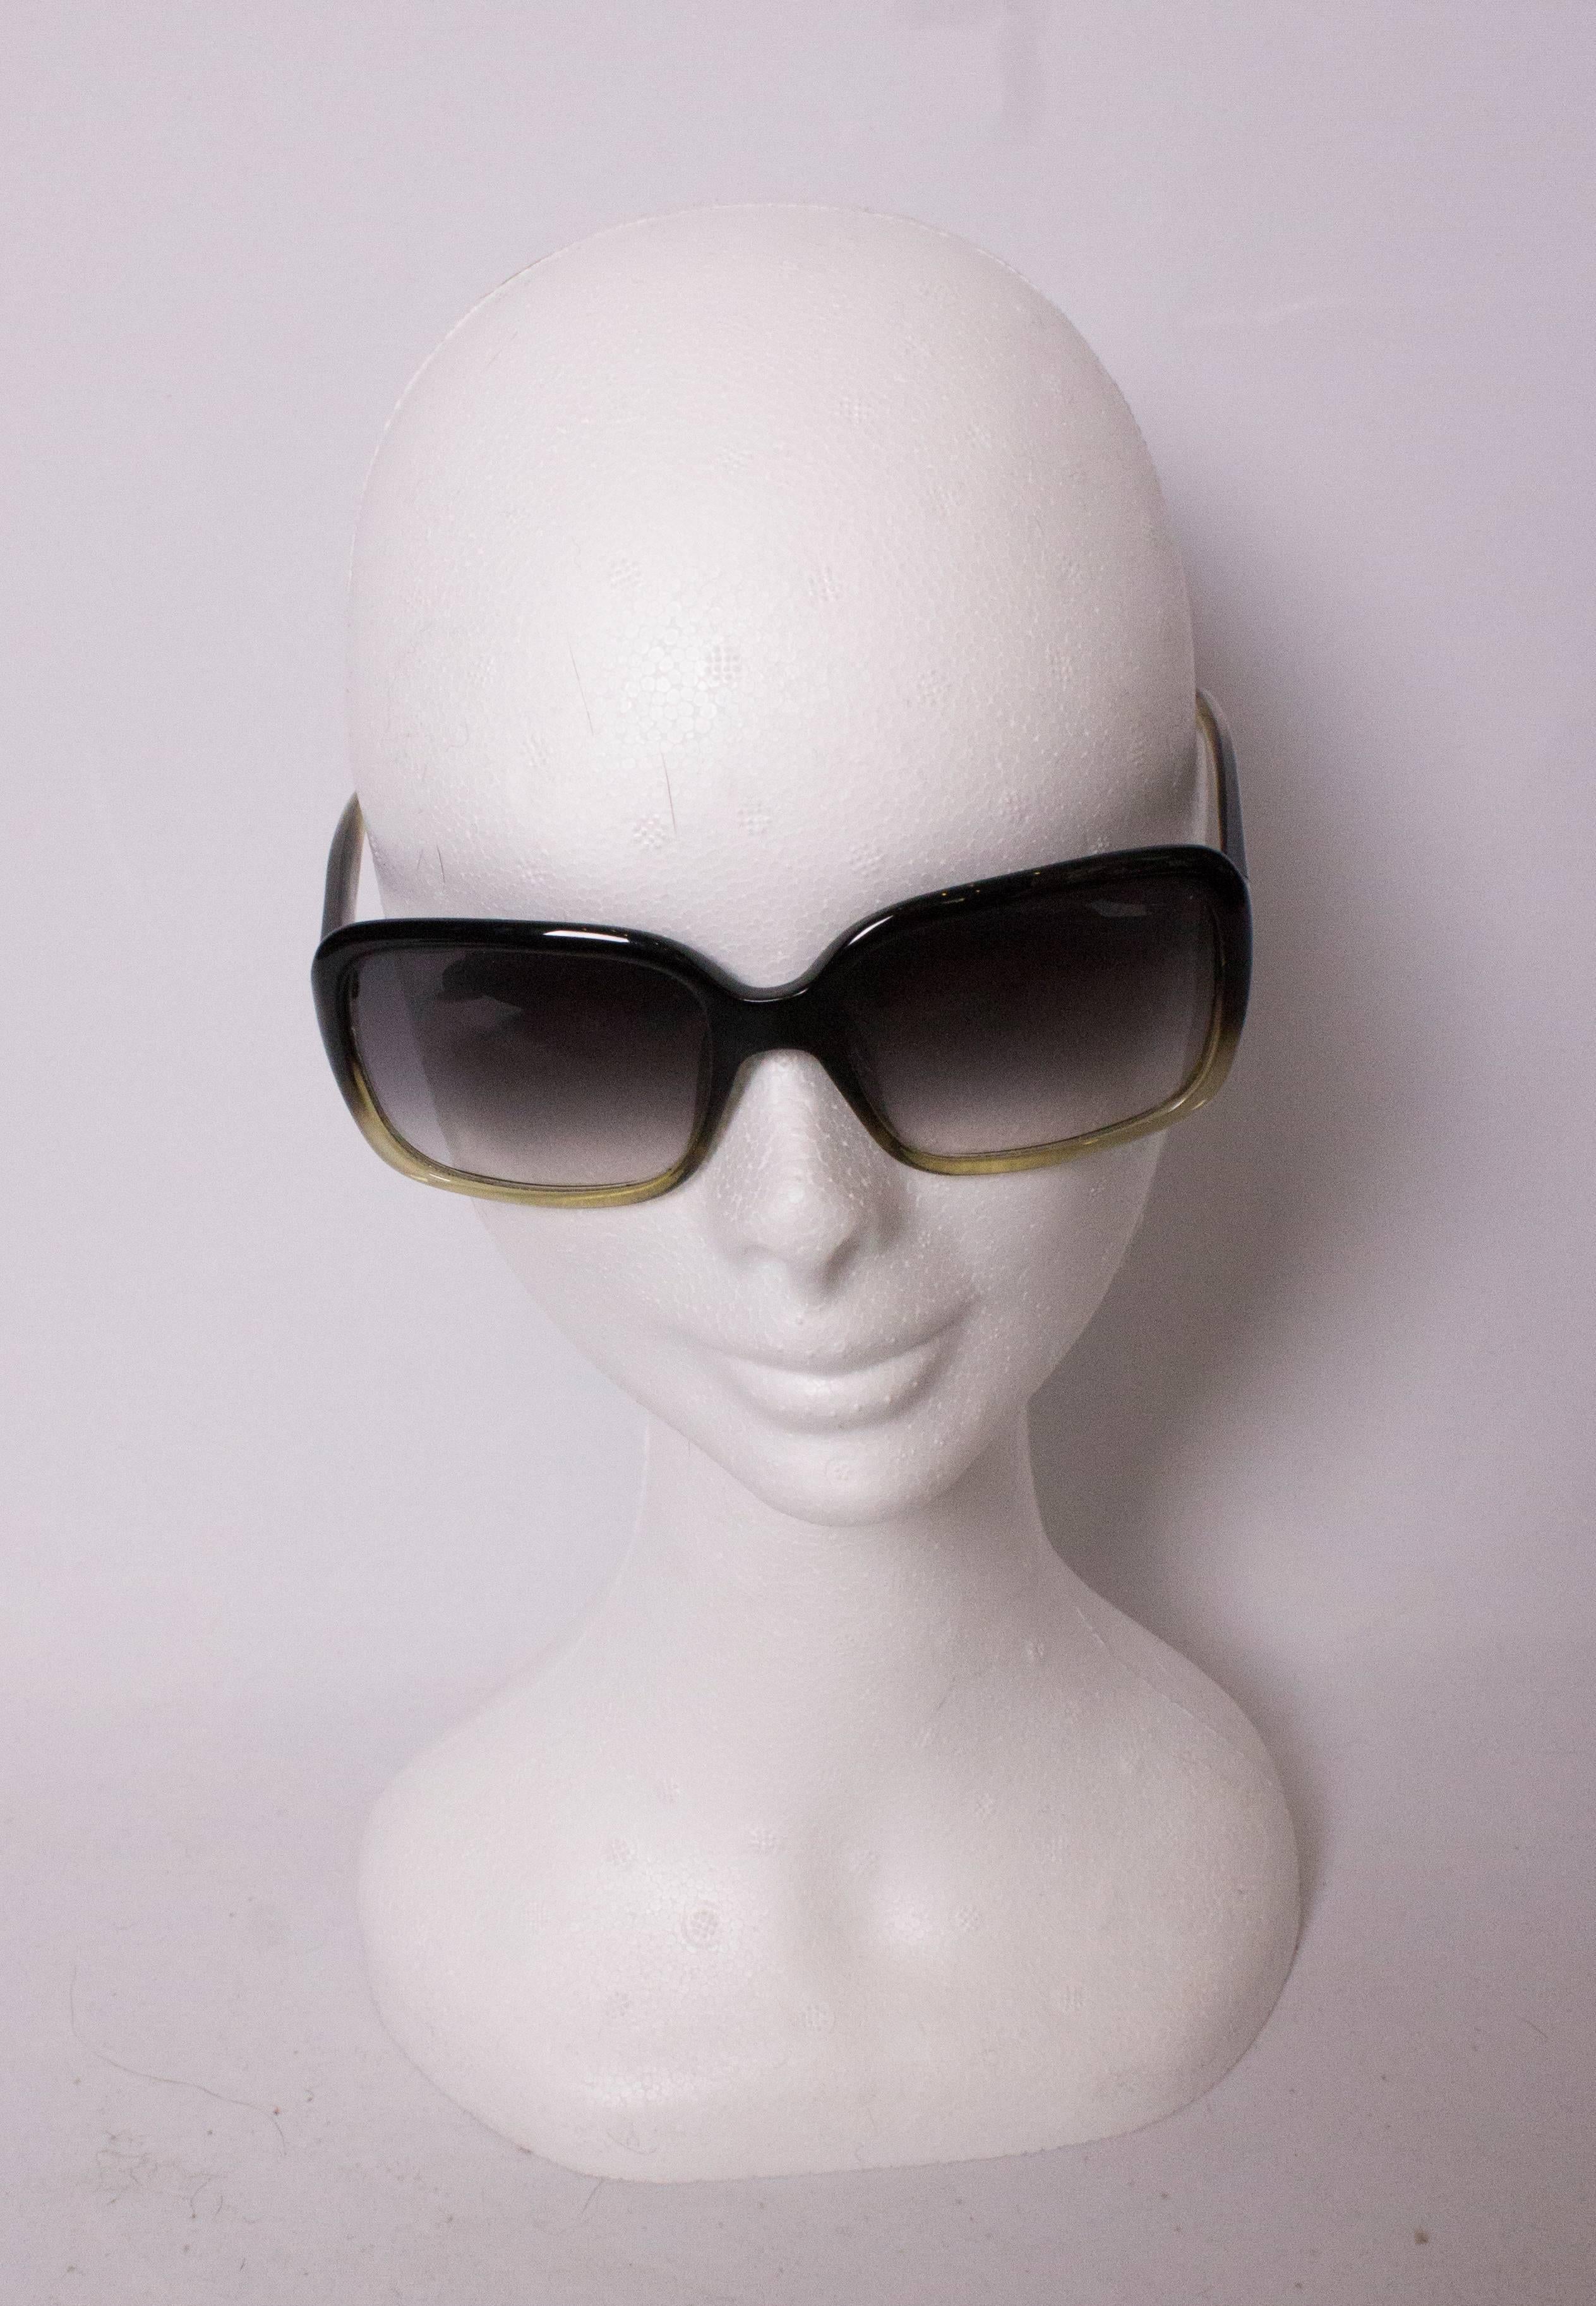 A chic pair of vintage sunglasses by Giorgio Armani.